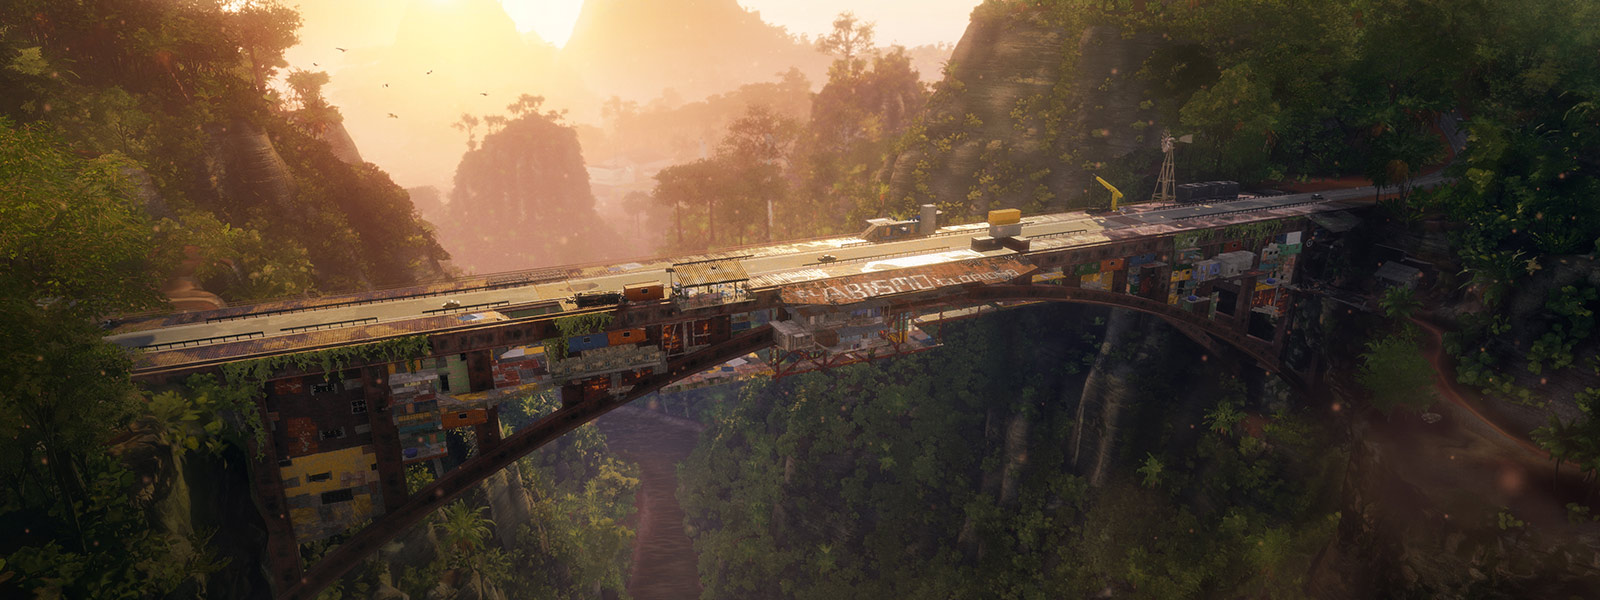 Large makeshift bridge connects rainforests